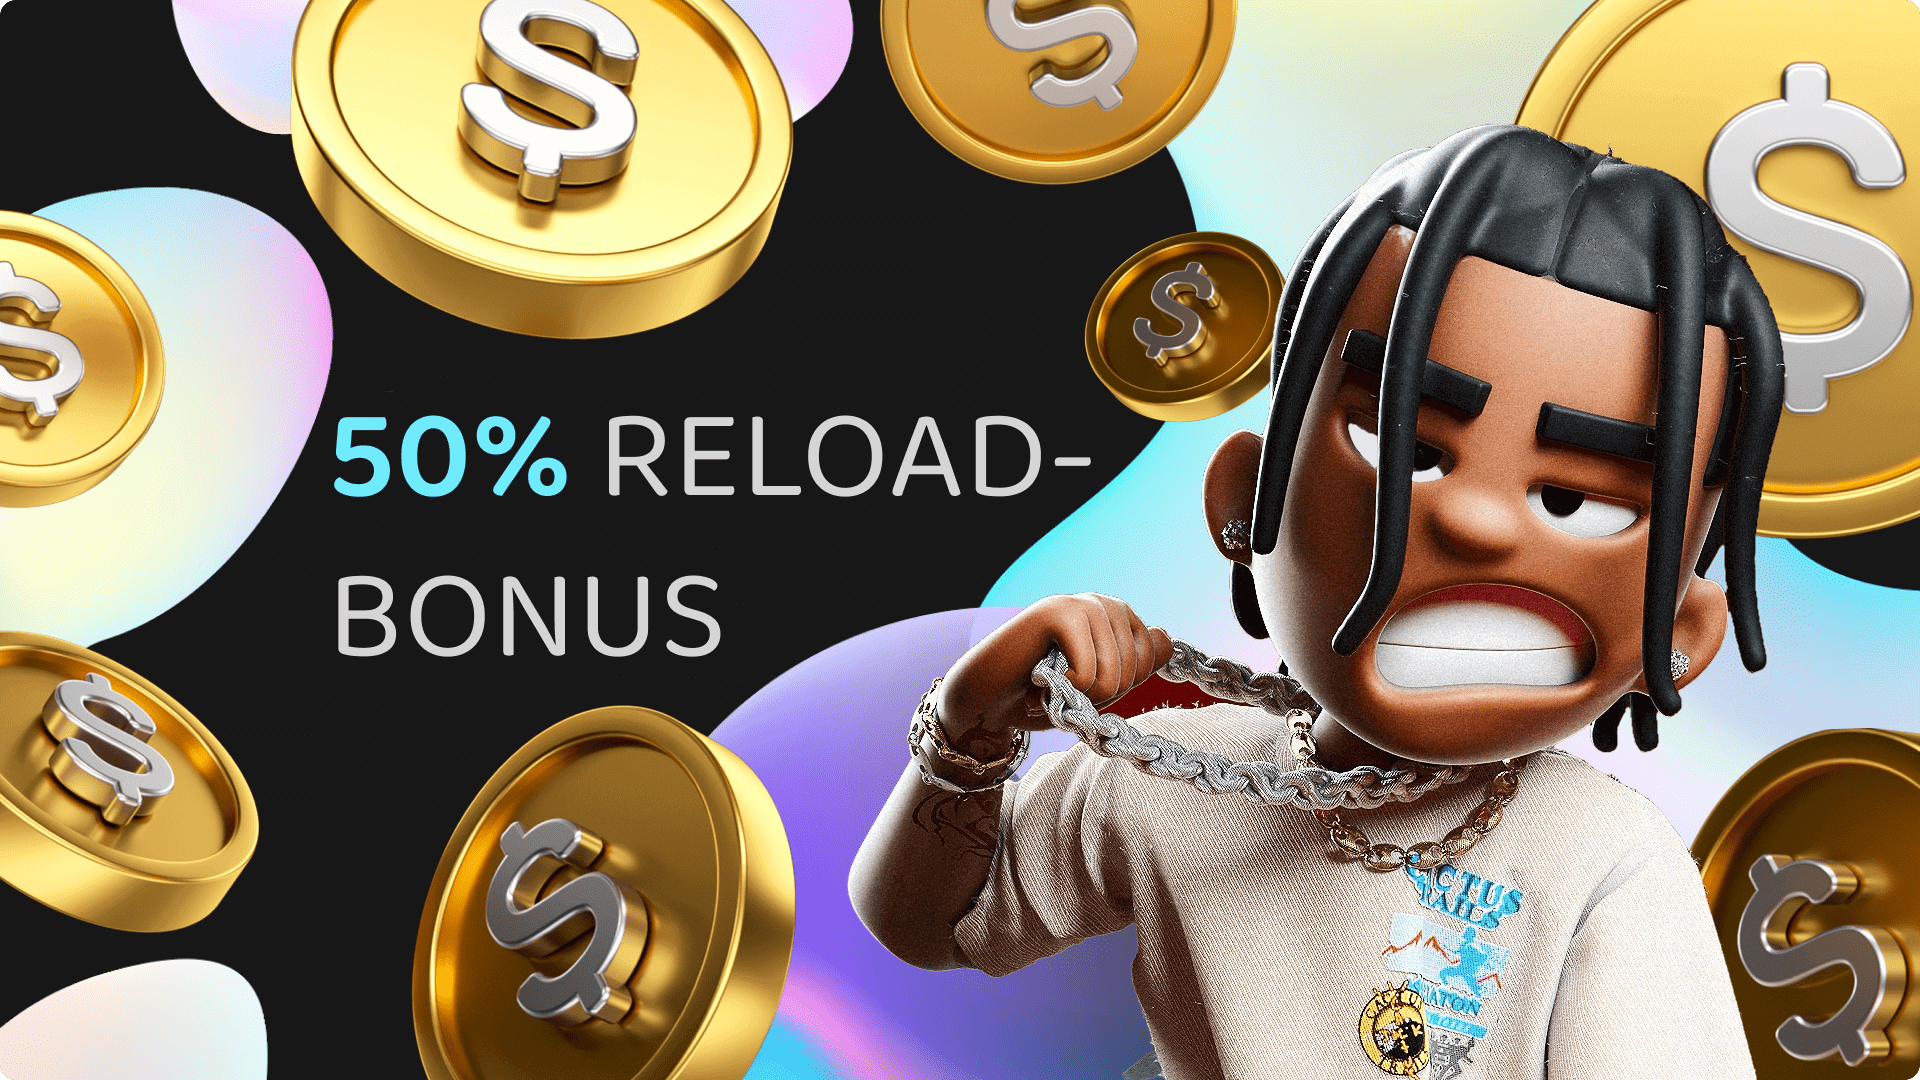 50% Reload-Bonus